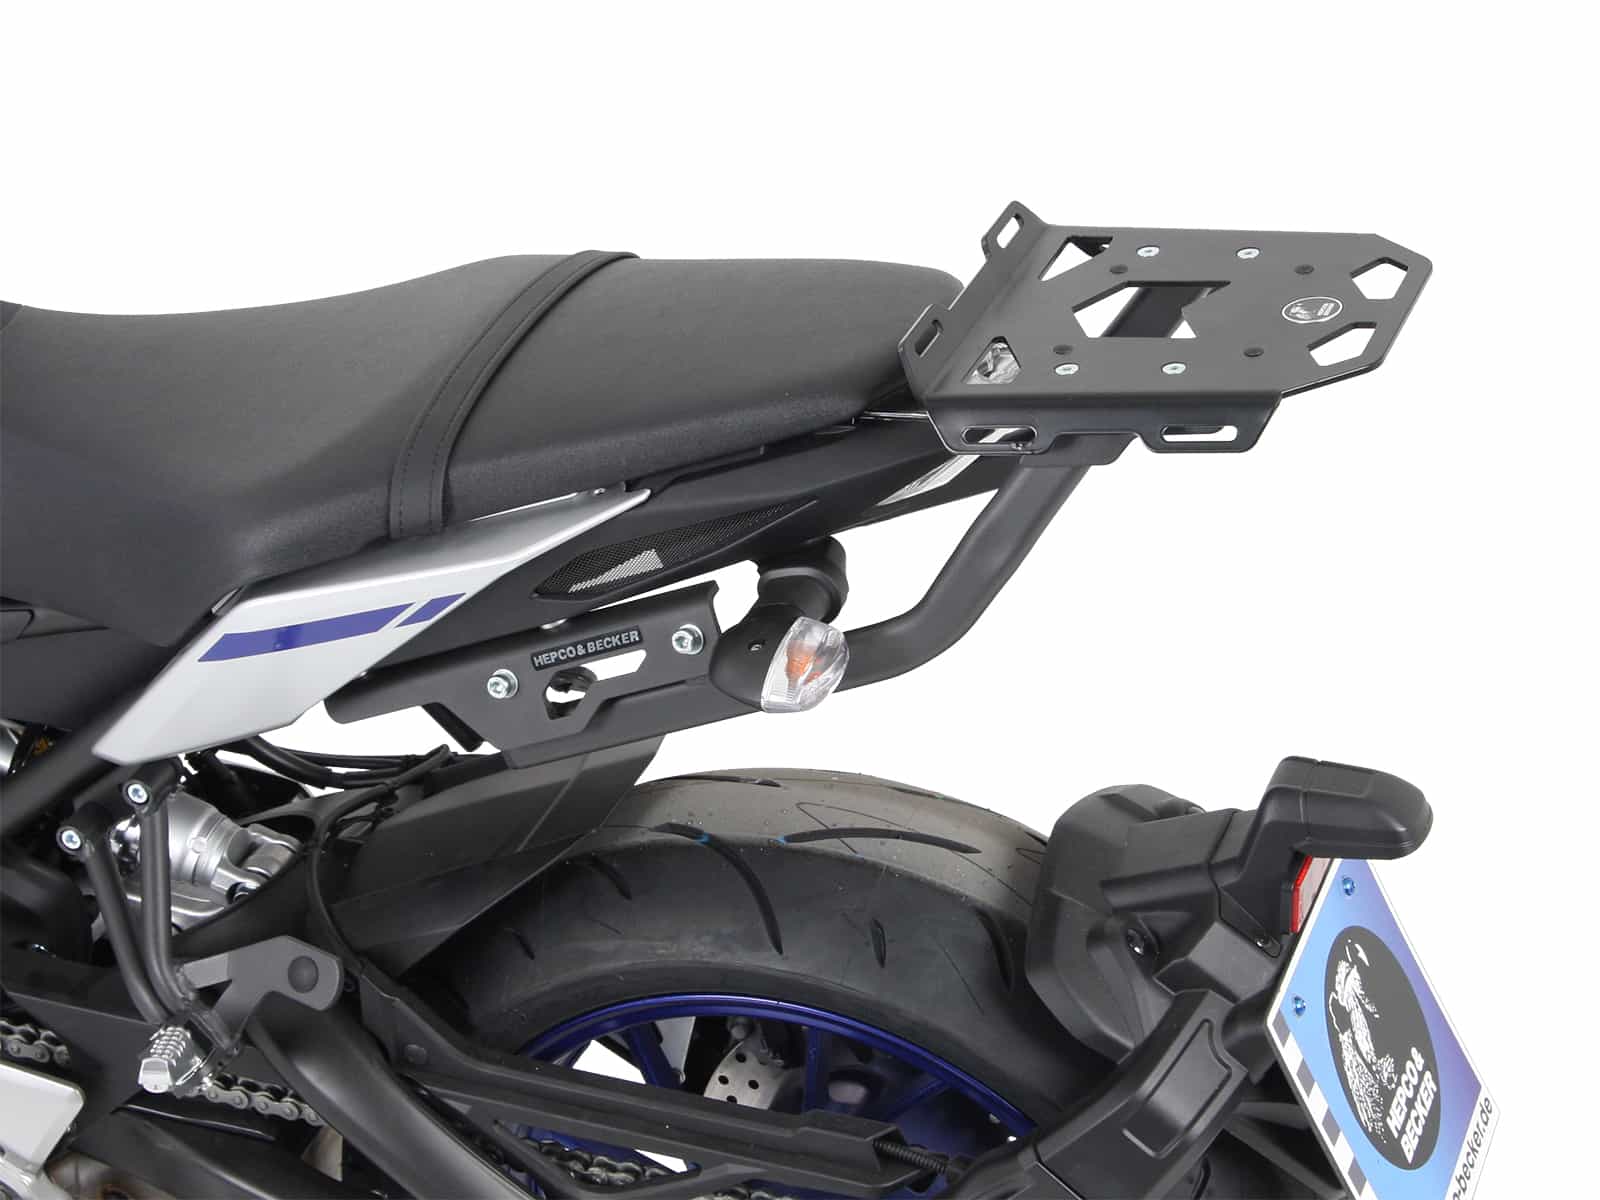 Minirack soft luggage rear rack for Yamaha MT-09 (2017-2020)